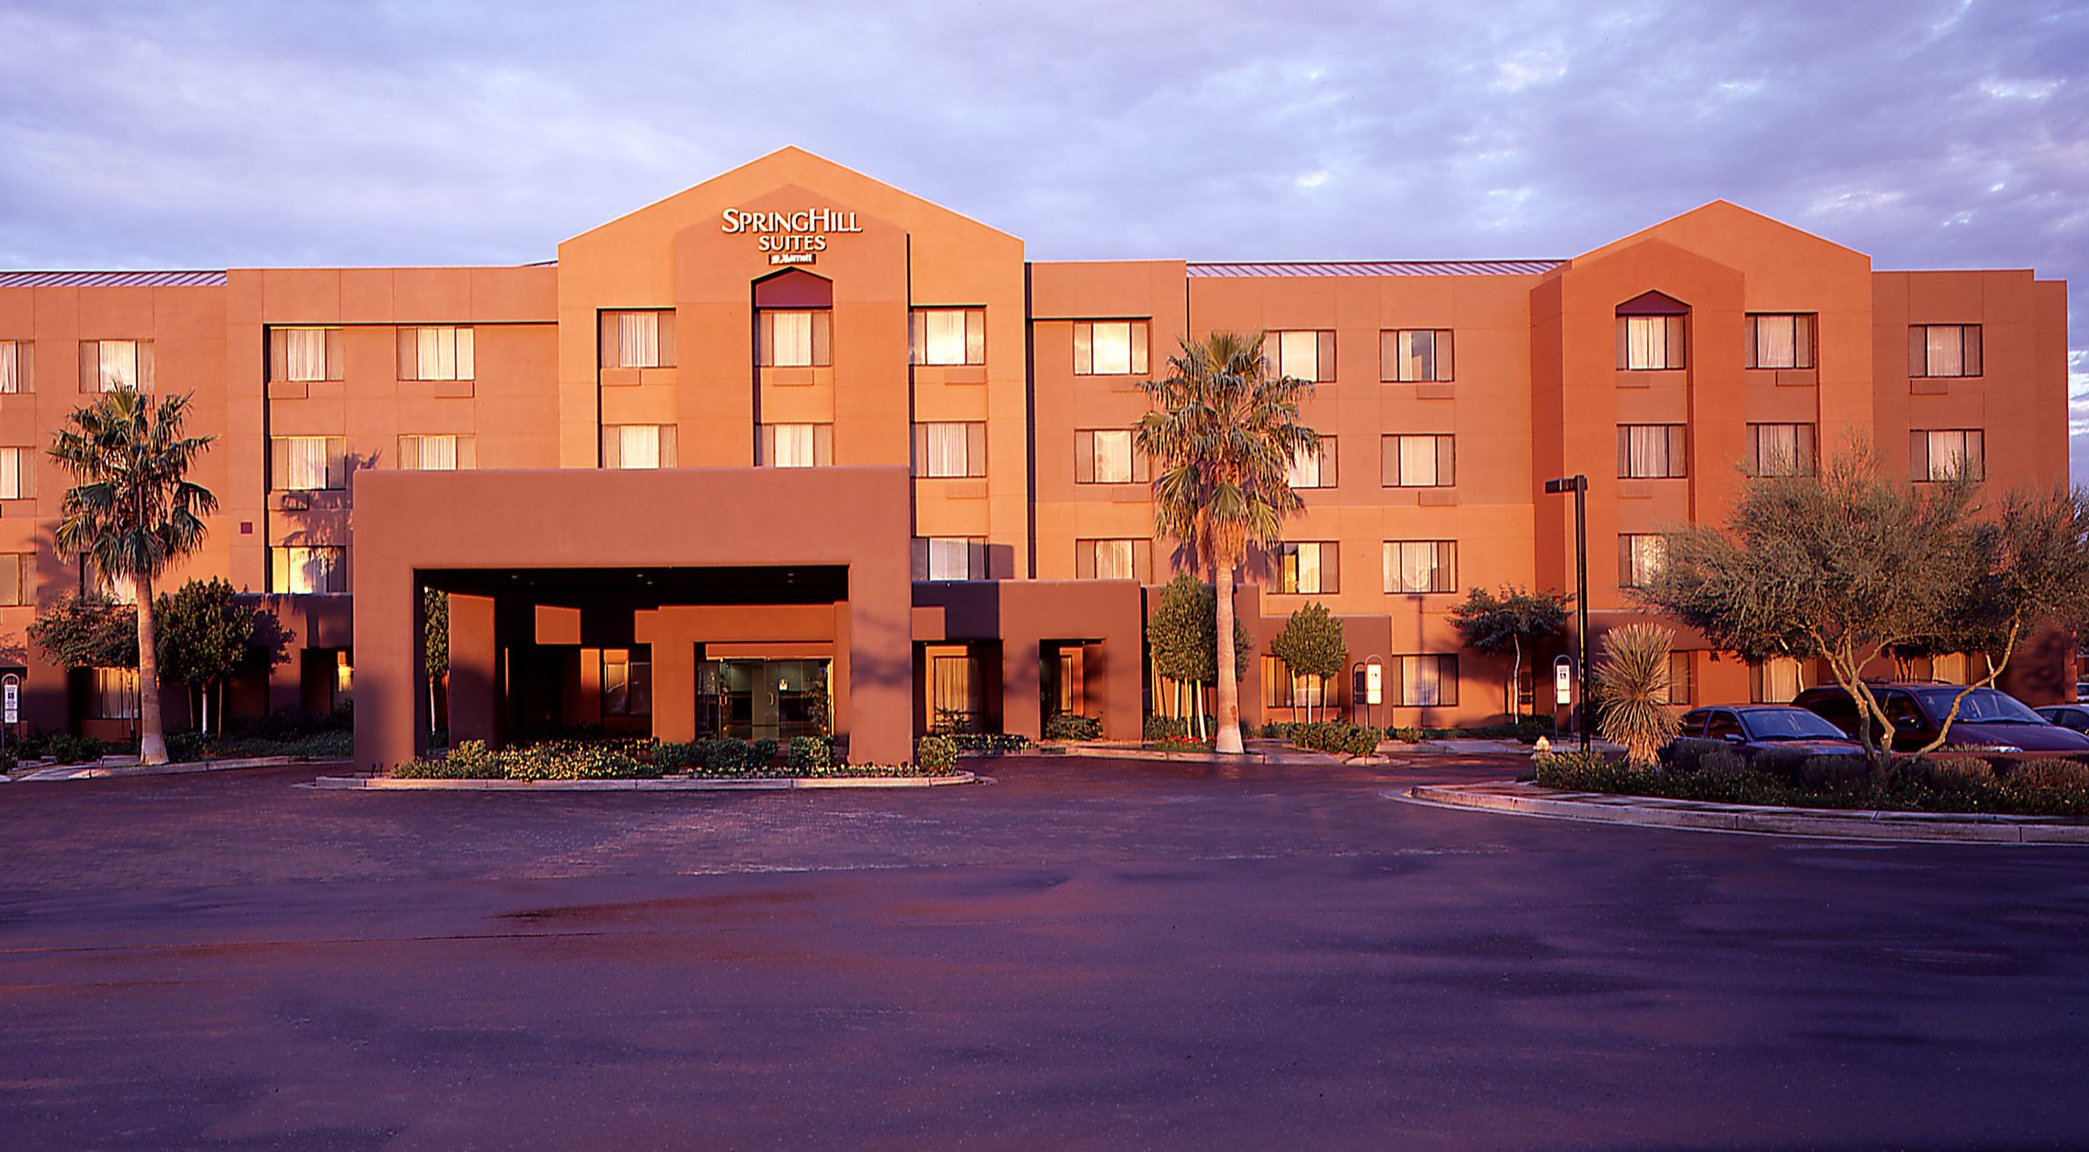 Photo of SpringHill Suites Scottsdale North, Scottsdale, AZ